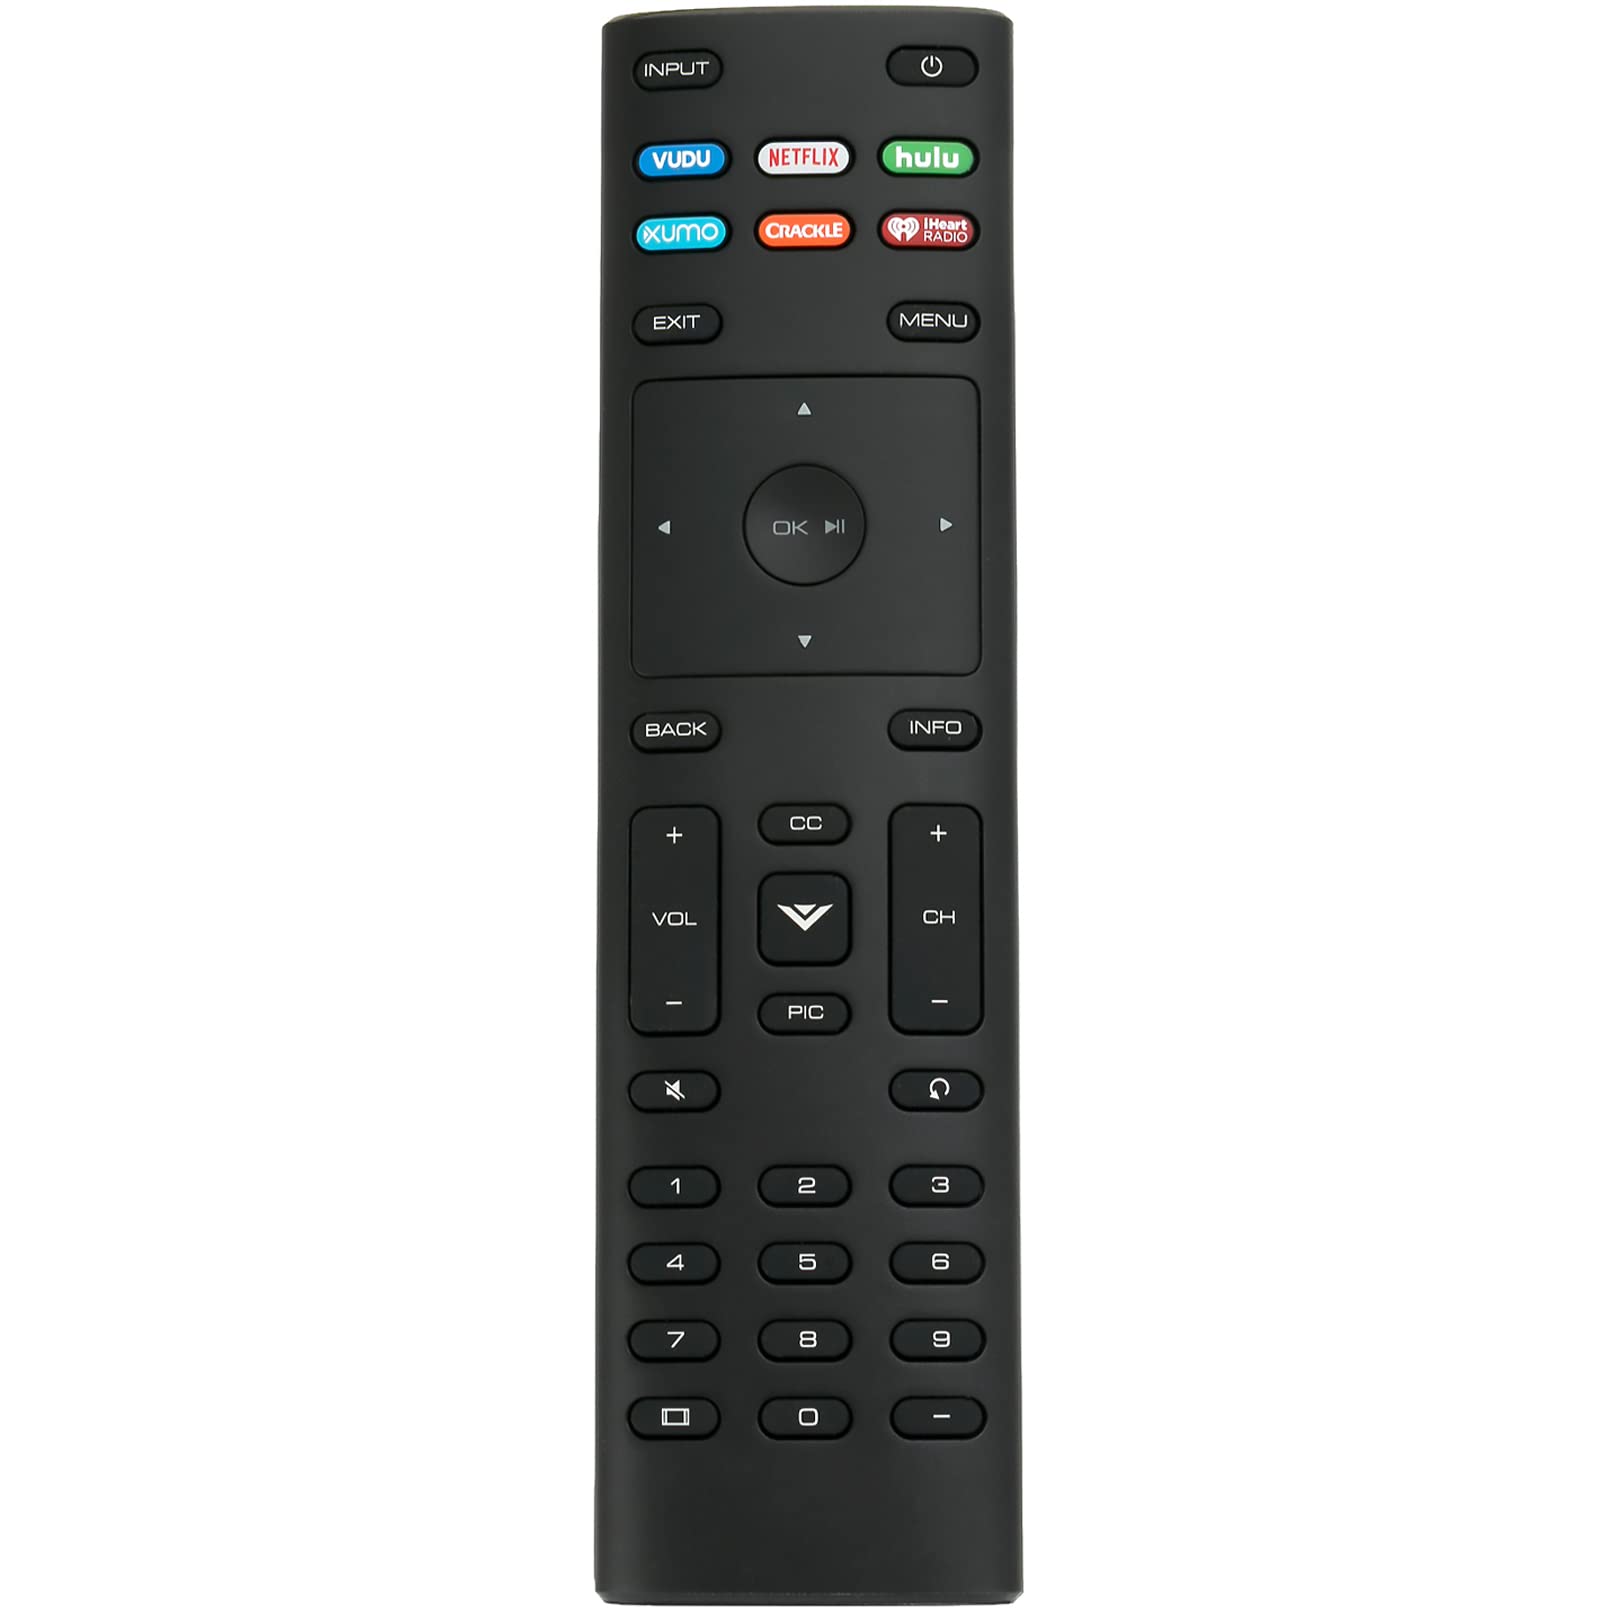 XRT136 Remote Control Replace fit for VIZIO TV D24F-F1 D32FF1 D43F-F1 E55U-D0 E55UD2 E55-D0 E55E1 M65-D0 M65E0 P65-E1 P75C1 P75E1 M70-E3 M75E1 E43-E2 D50F-F1 E32-D1 E32H-D1 E40-D0 E43-D2 E43U-D2